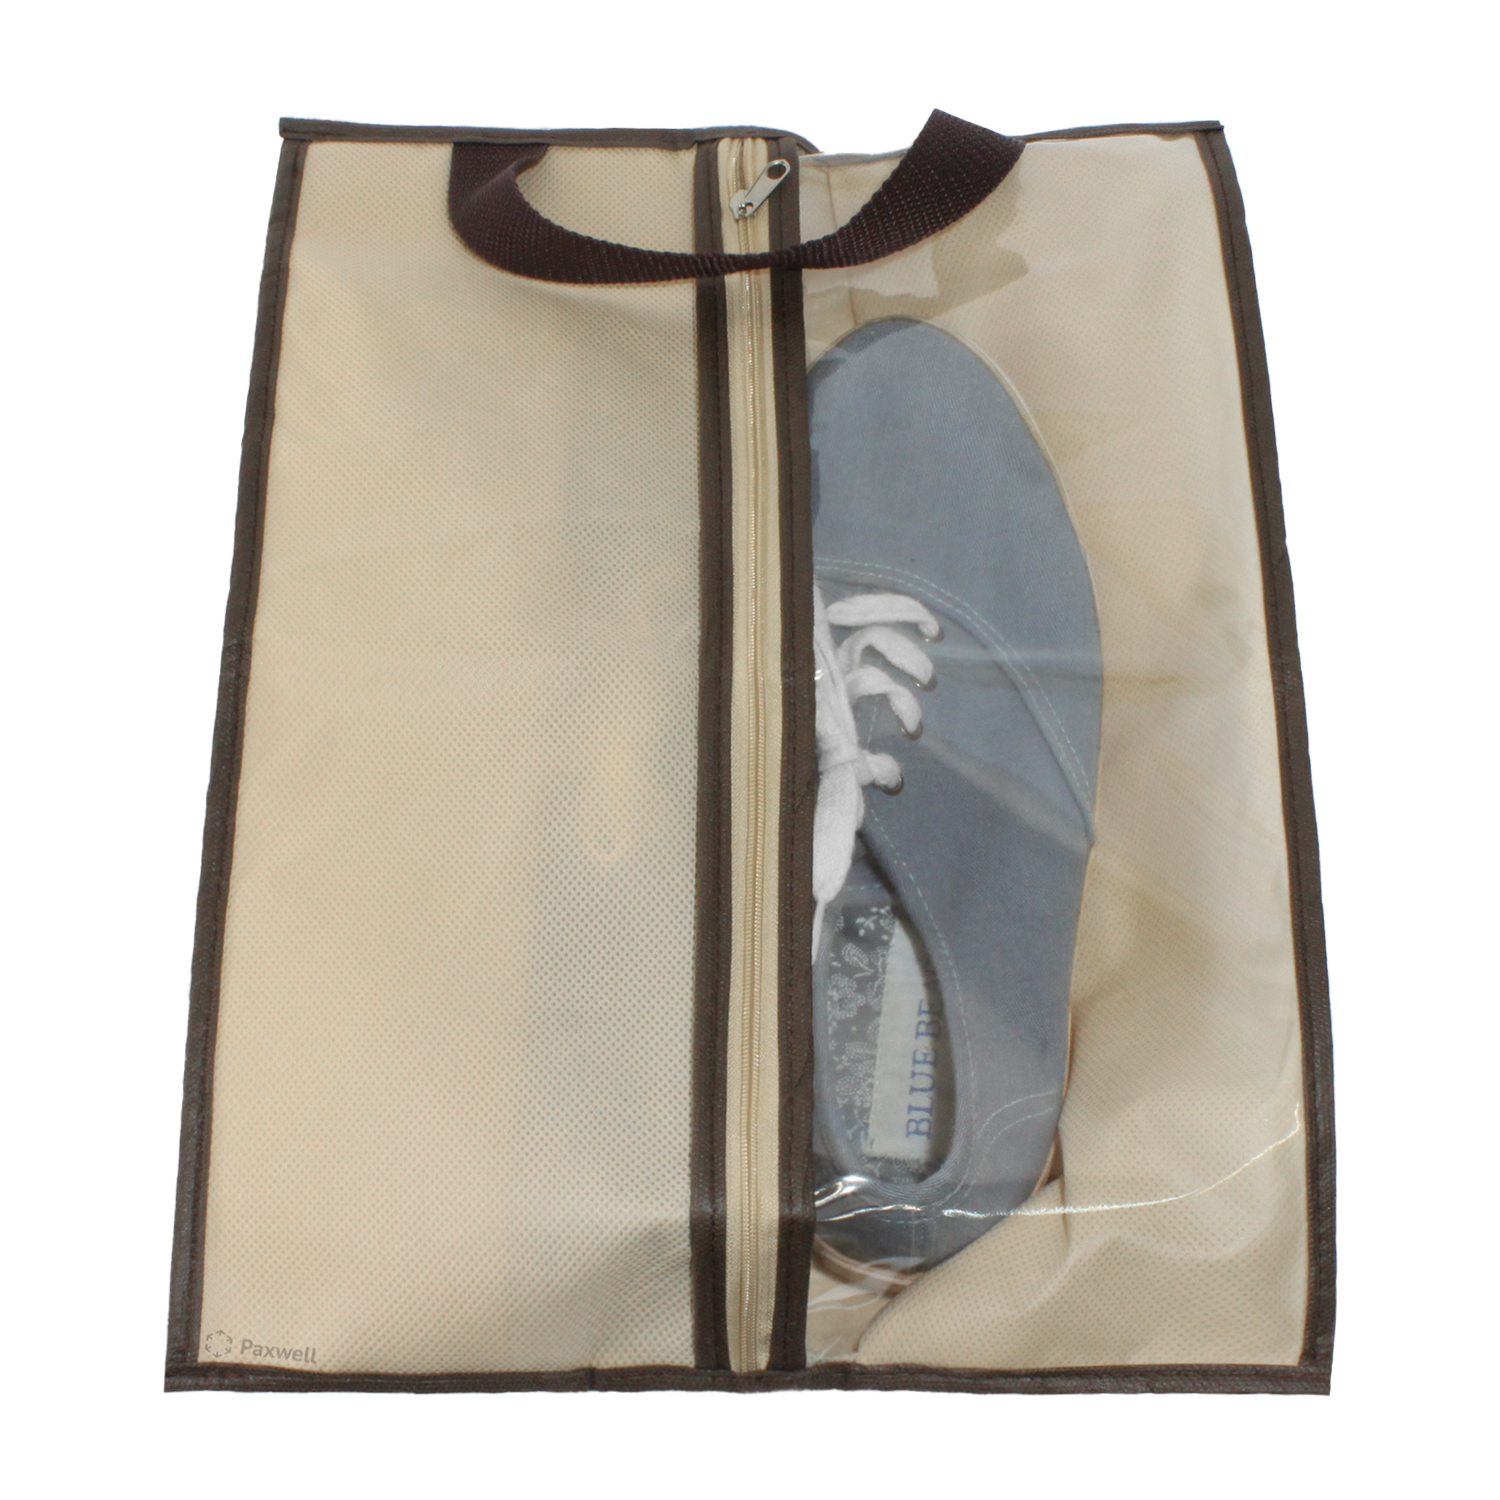 Чехол-сумка для вещей и обуви Paxwell Ордер Лайт 4027, бежевый